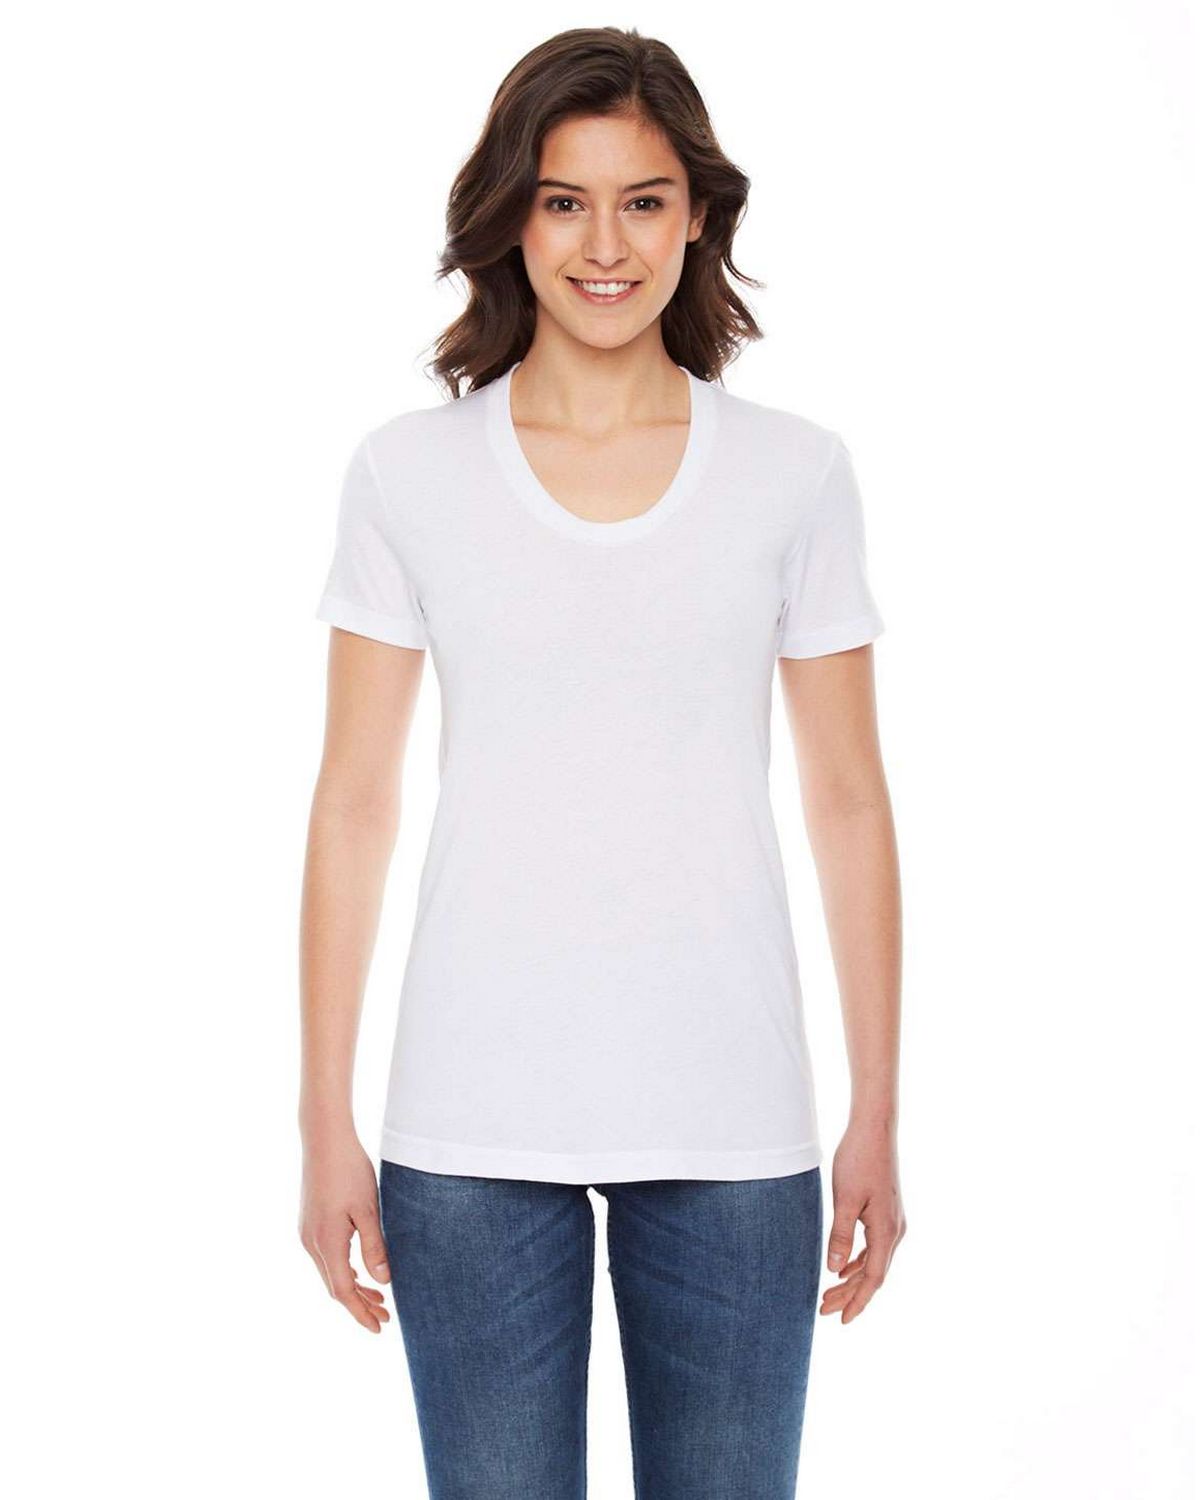 American Apparel BB301W Women's Poly-Cotton Short-Sleeve Crewneck T-Shirt